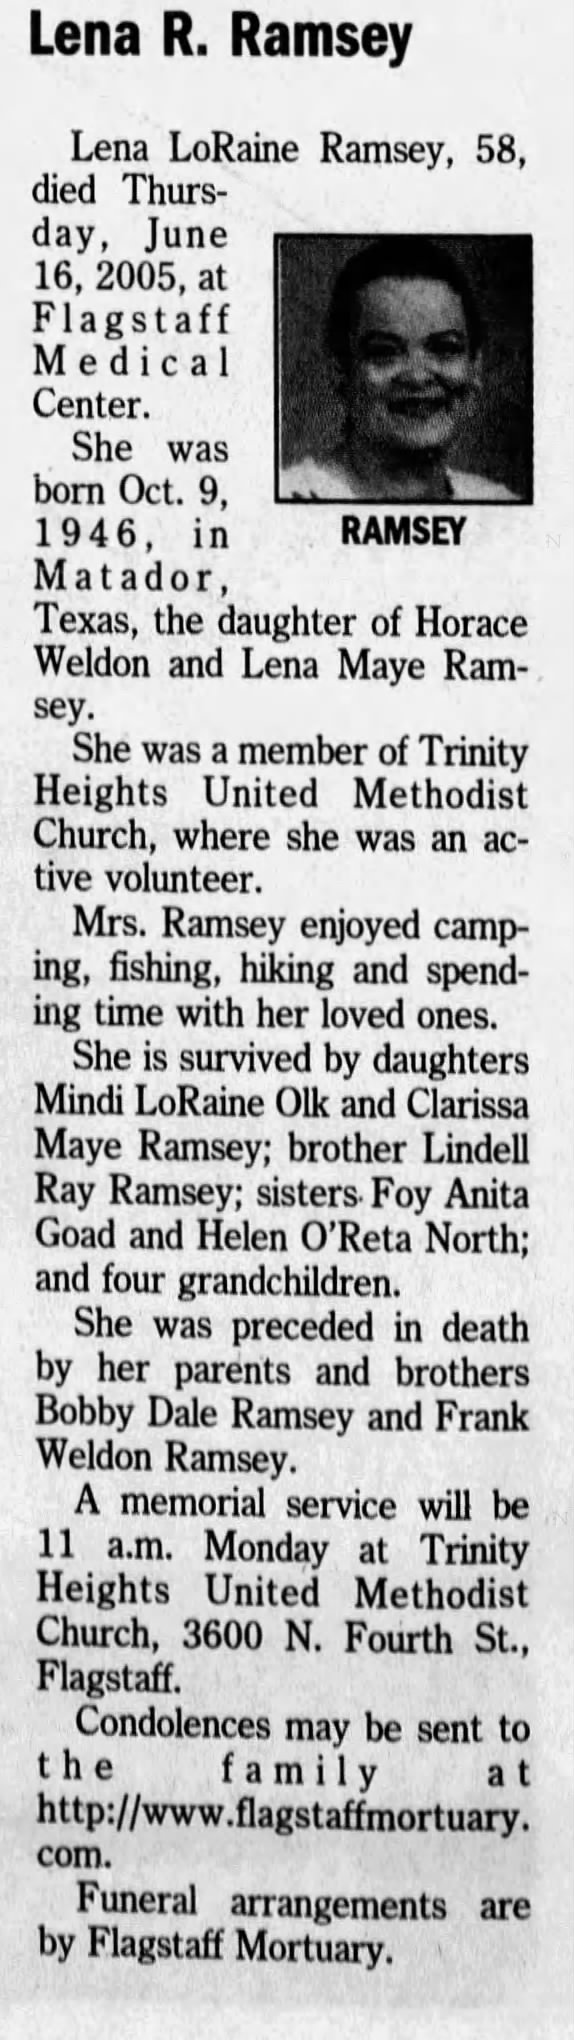 Obituary for Lena R. Ramsey, 1946-2005 (Aged 58)